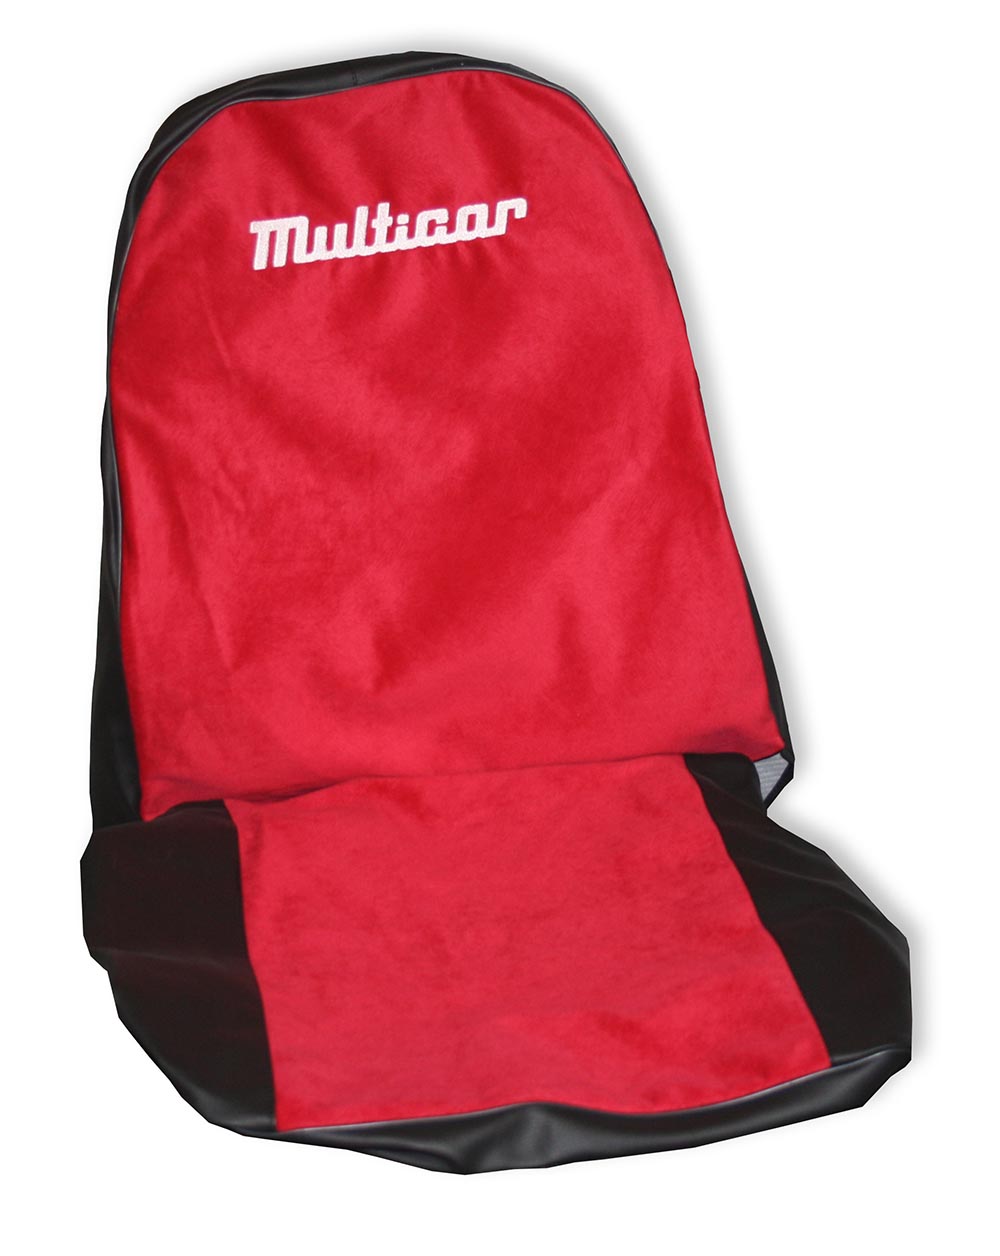 Multicar M25 Sitzbezug / Schonbezug rot "Multicar"